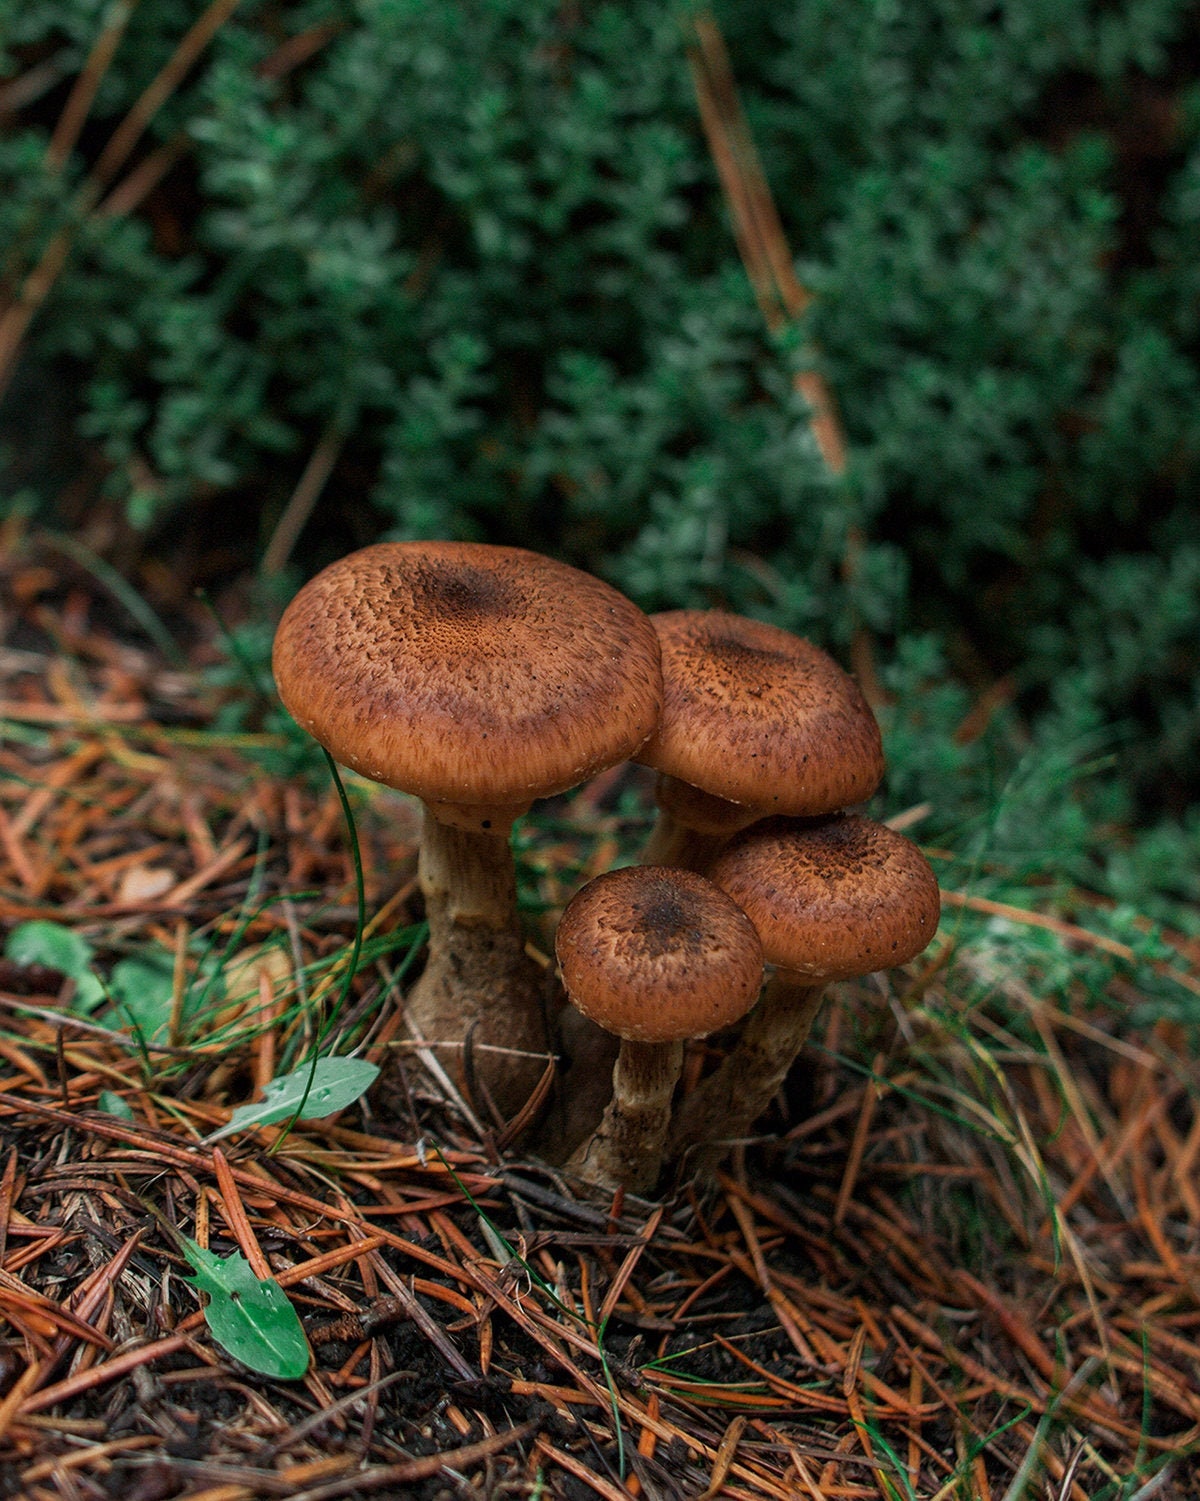 Mushroom Photo Print Cute Woodland Photography